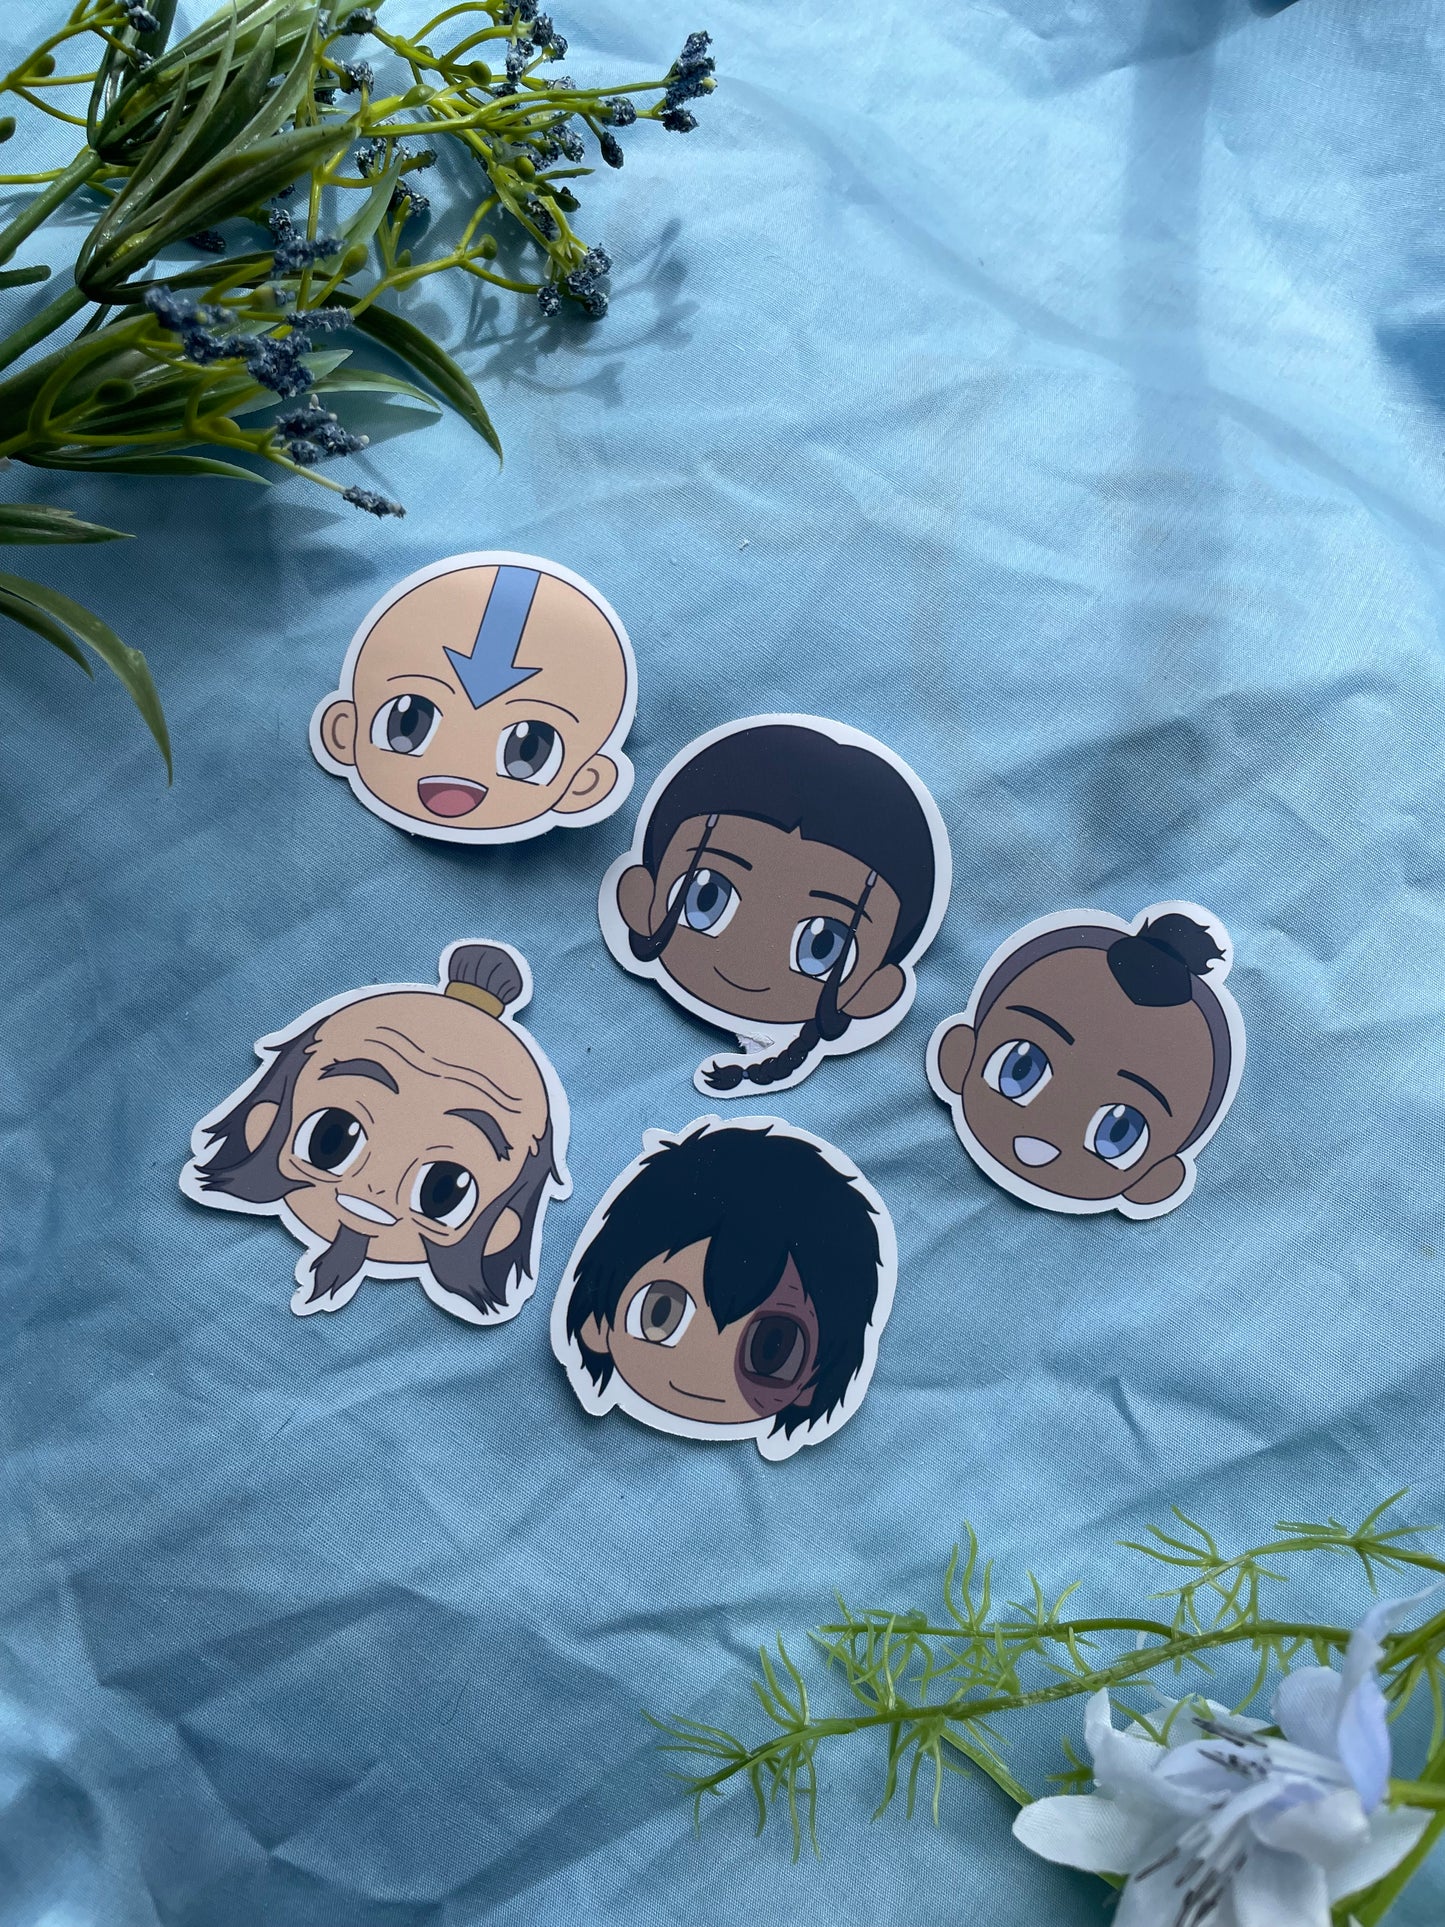 Avatar stickers